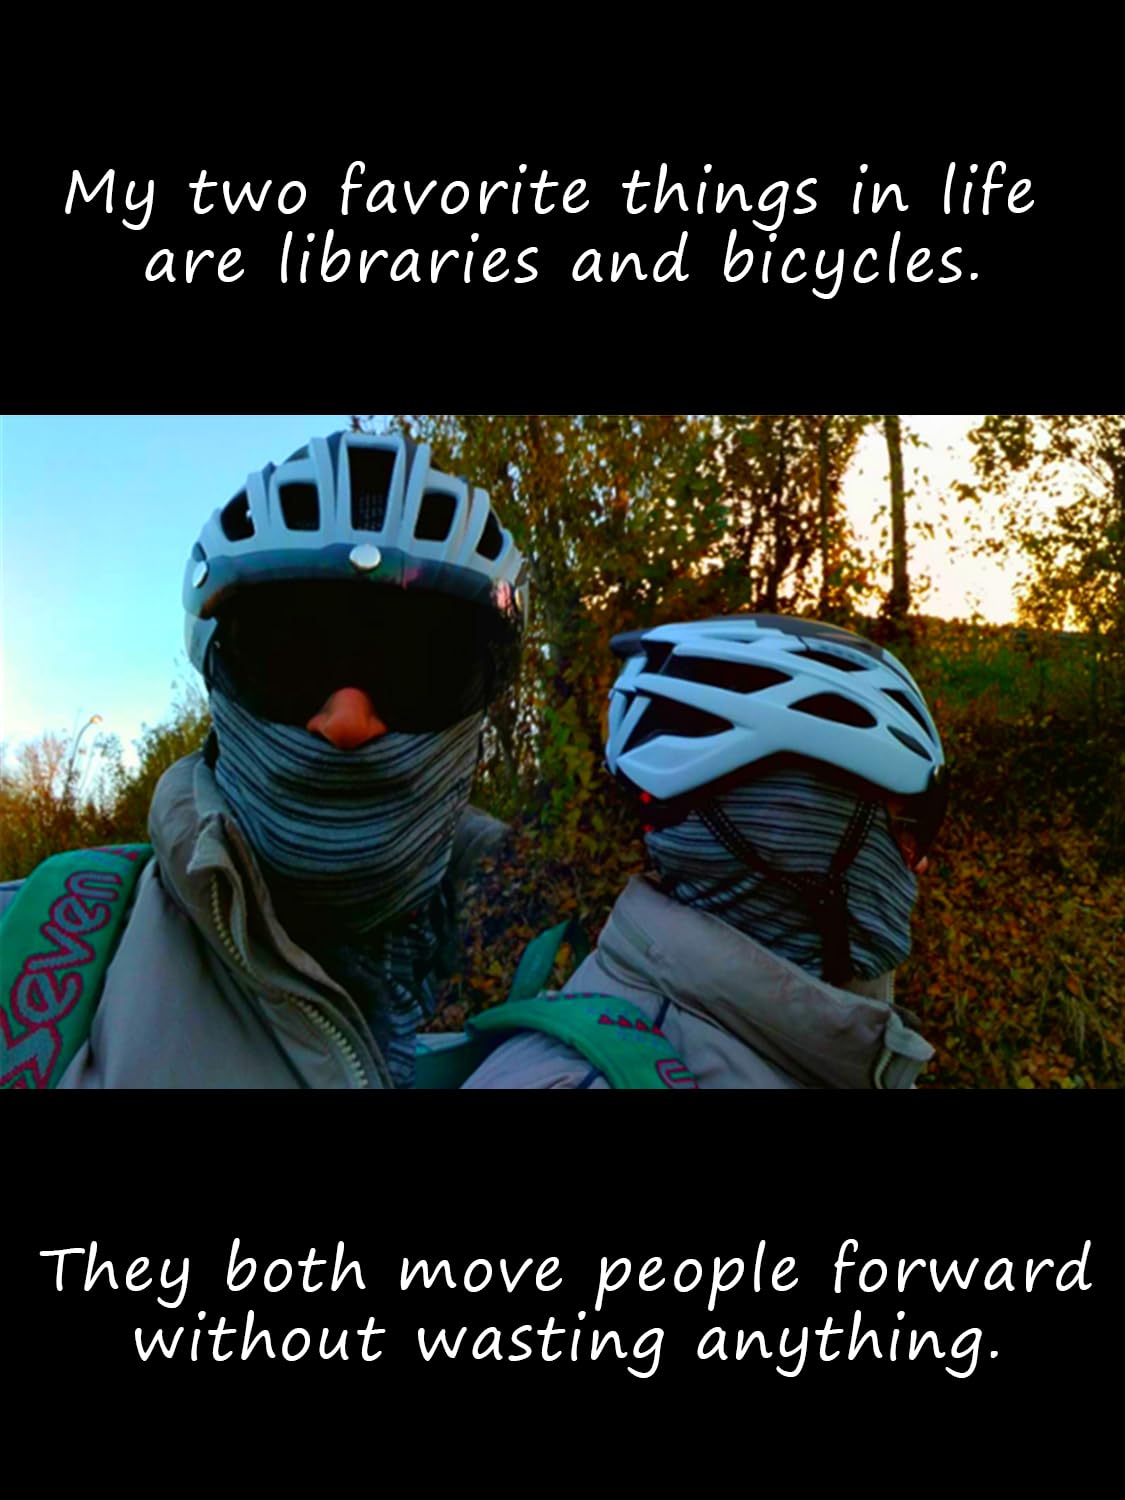 Shinmax 自転車 ヘルメット 大人 LEDライト 磁気ゴーグル付 ロードバイク ヘルメット CPSC認定済み 57-62cm 超軽量 通勤 通学 サイクリング サイクルヘルメット 男性 女性 中学生 高校生 収納袋 予備バッテリー付 M/L